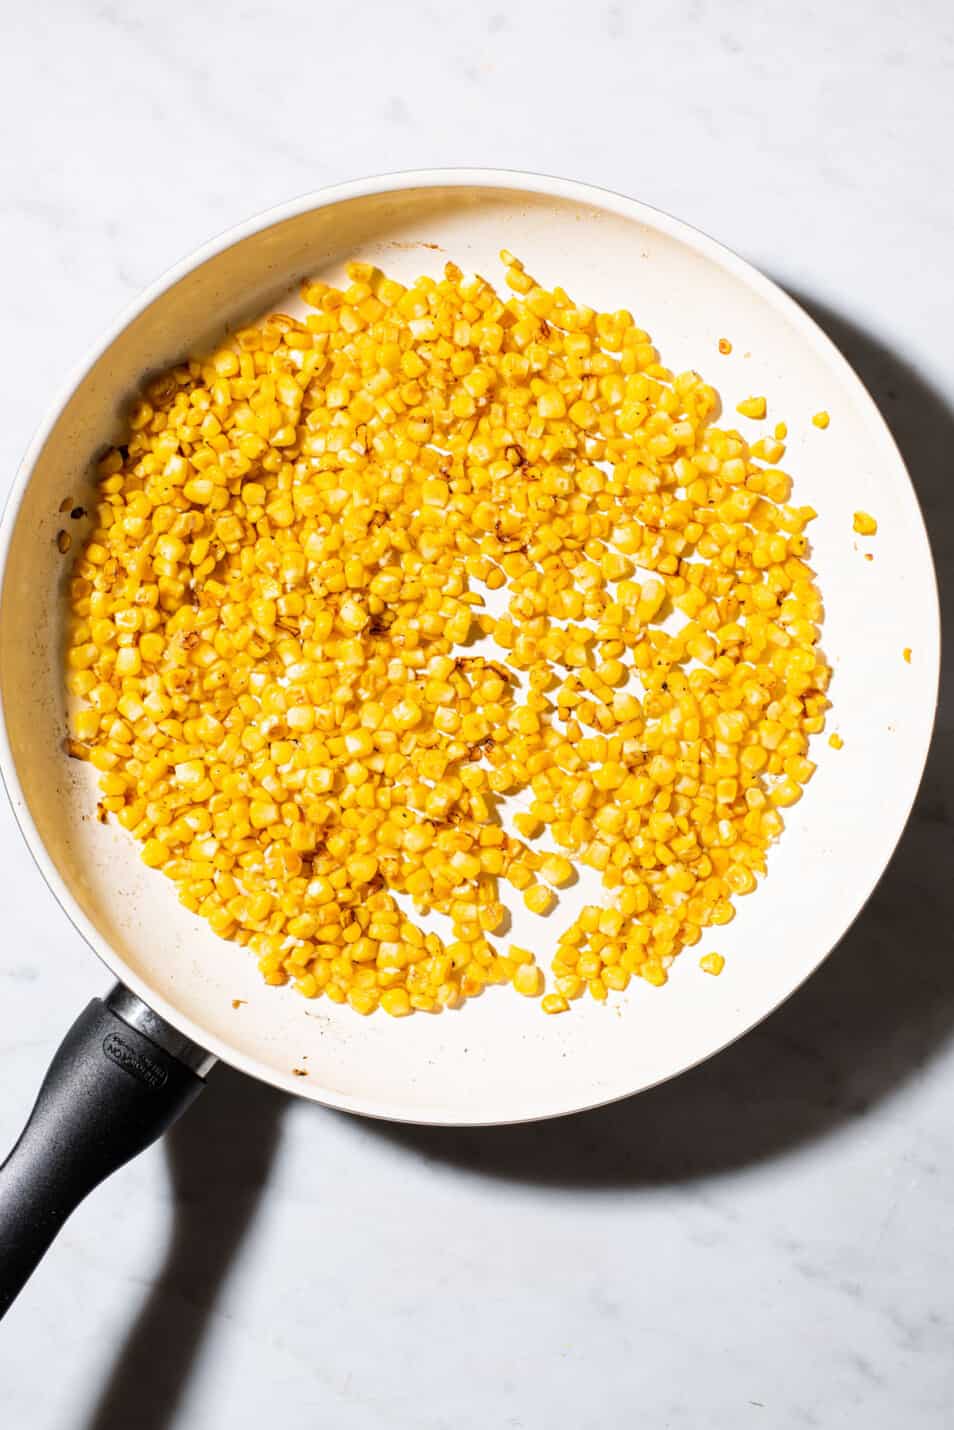 Sautéed corn kernels in a white skillet.